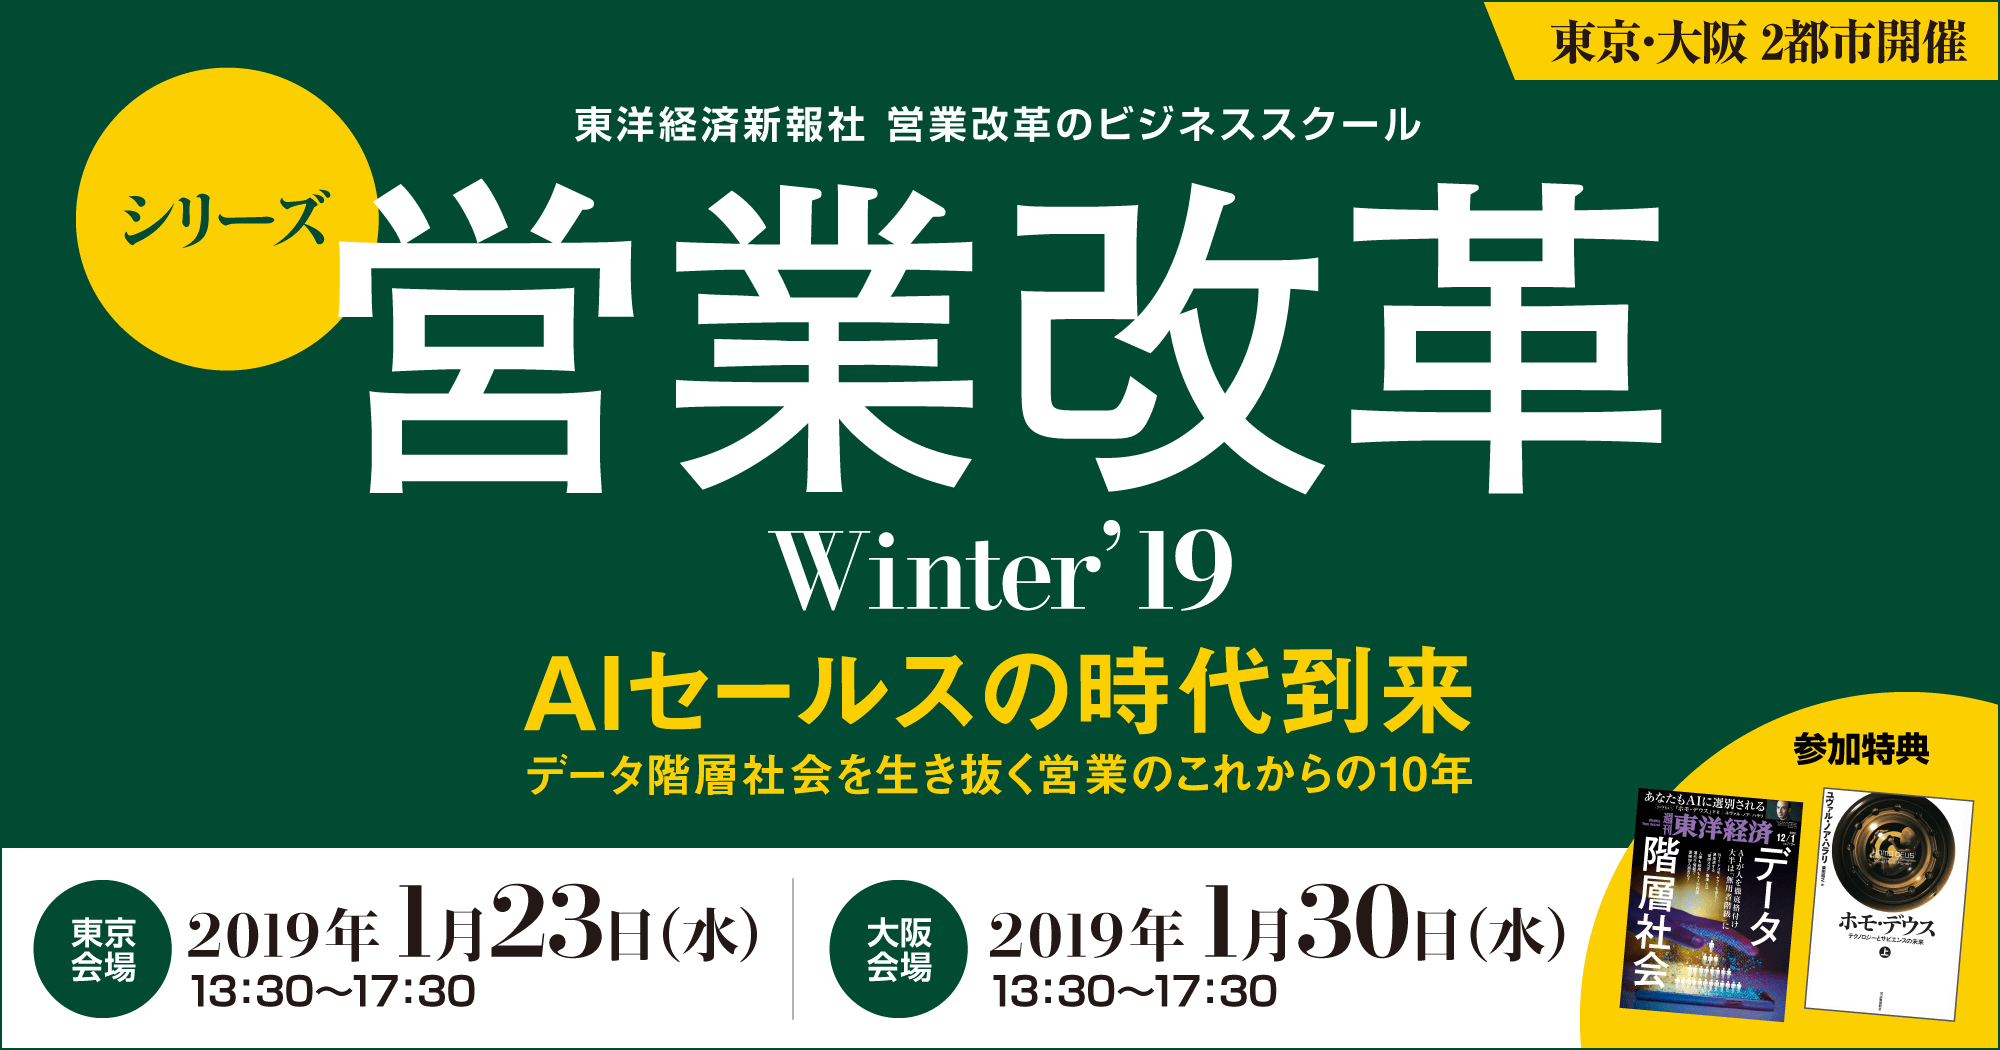 シリーズ営業改革 Winter’19【東京会場】